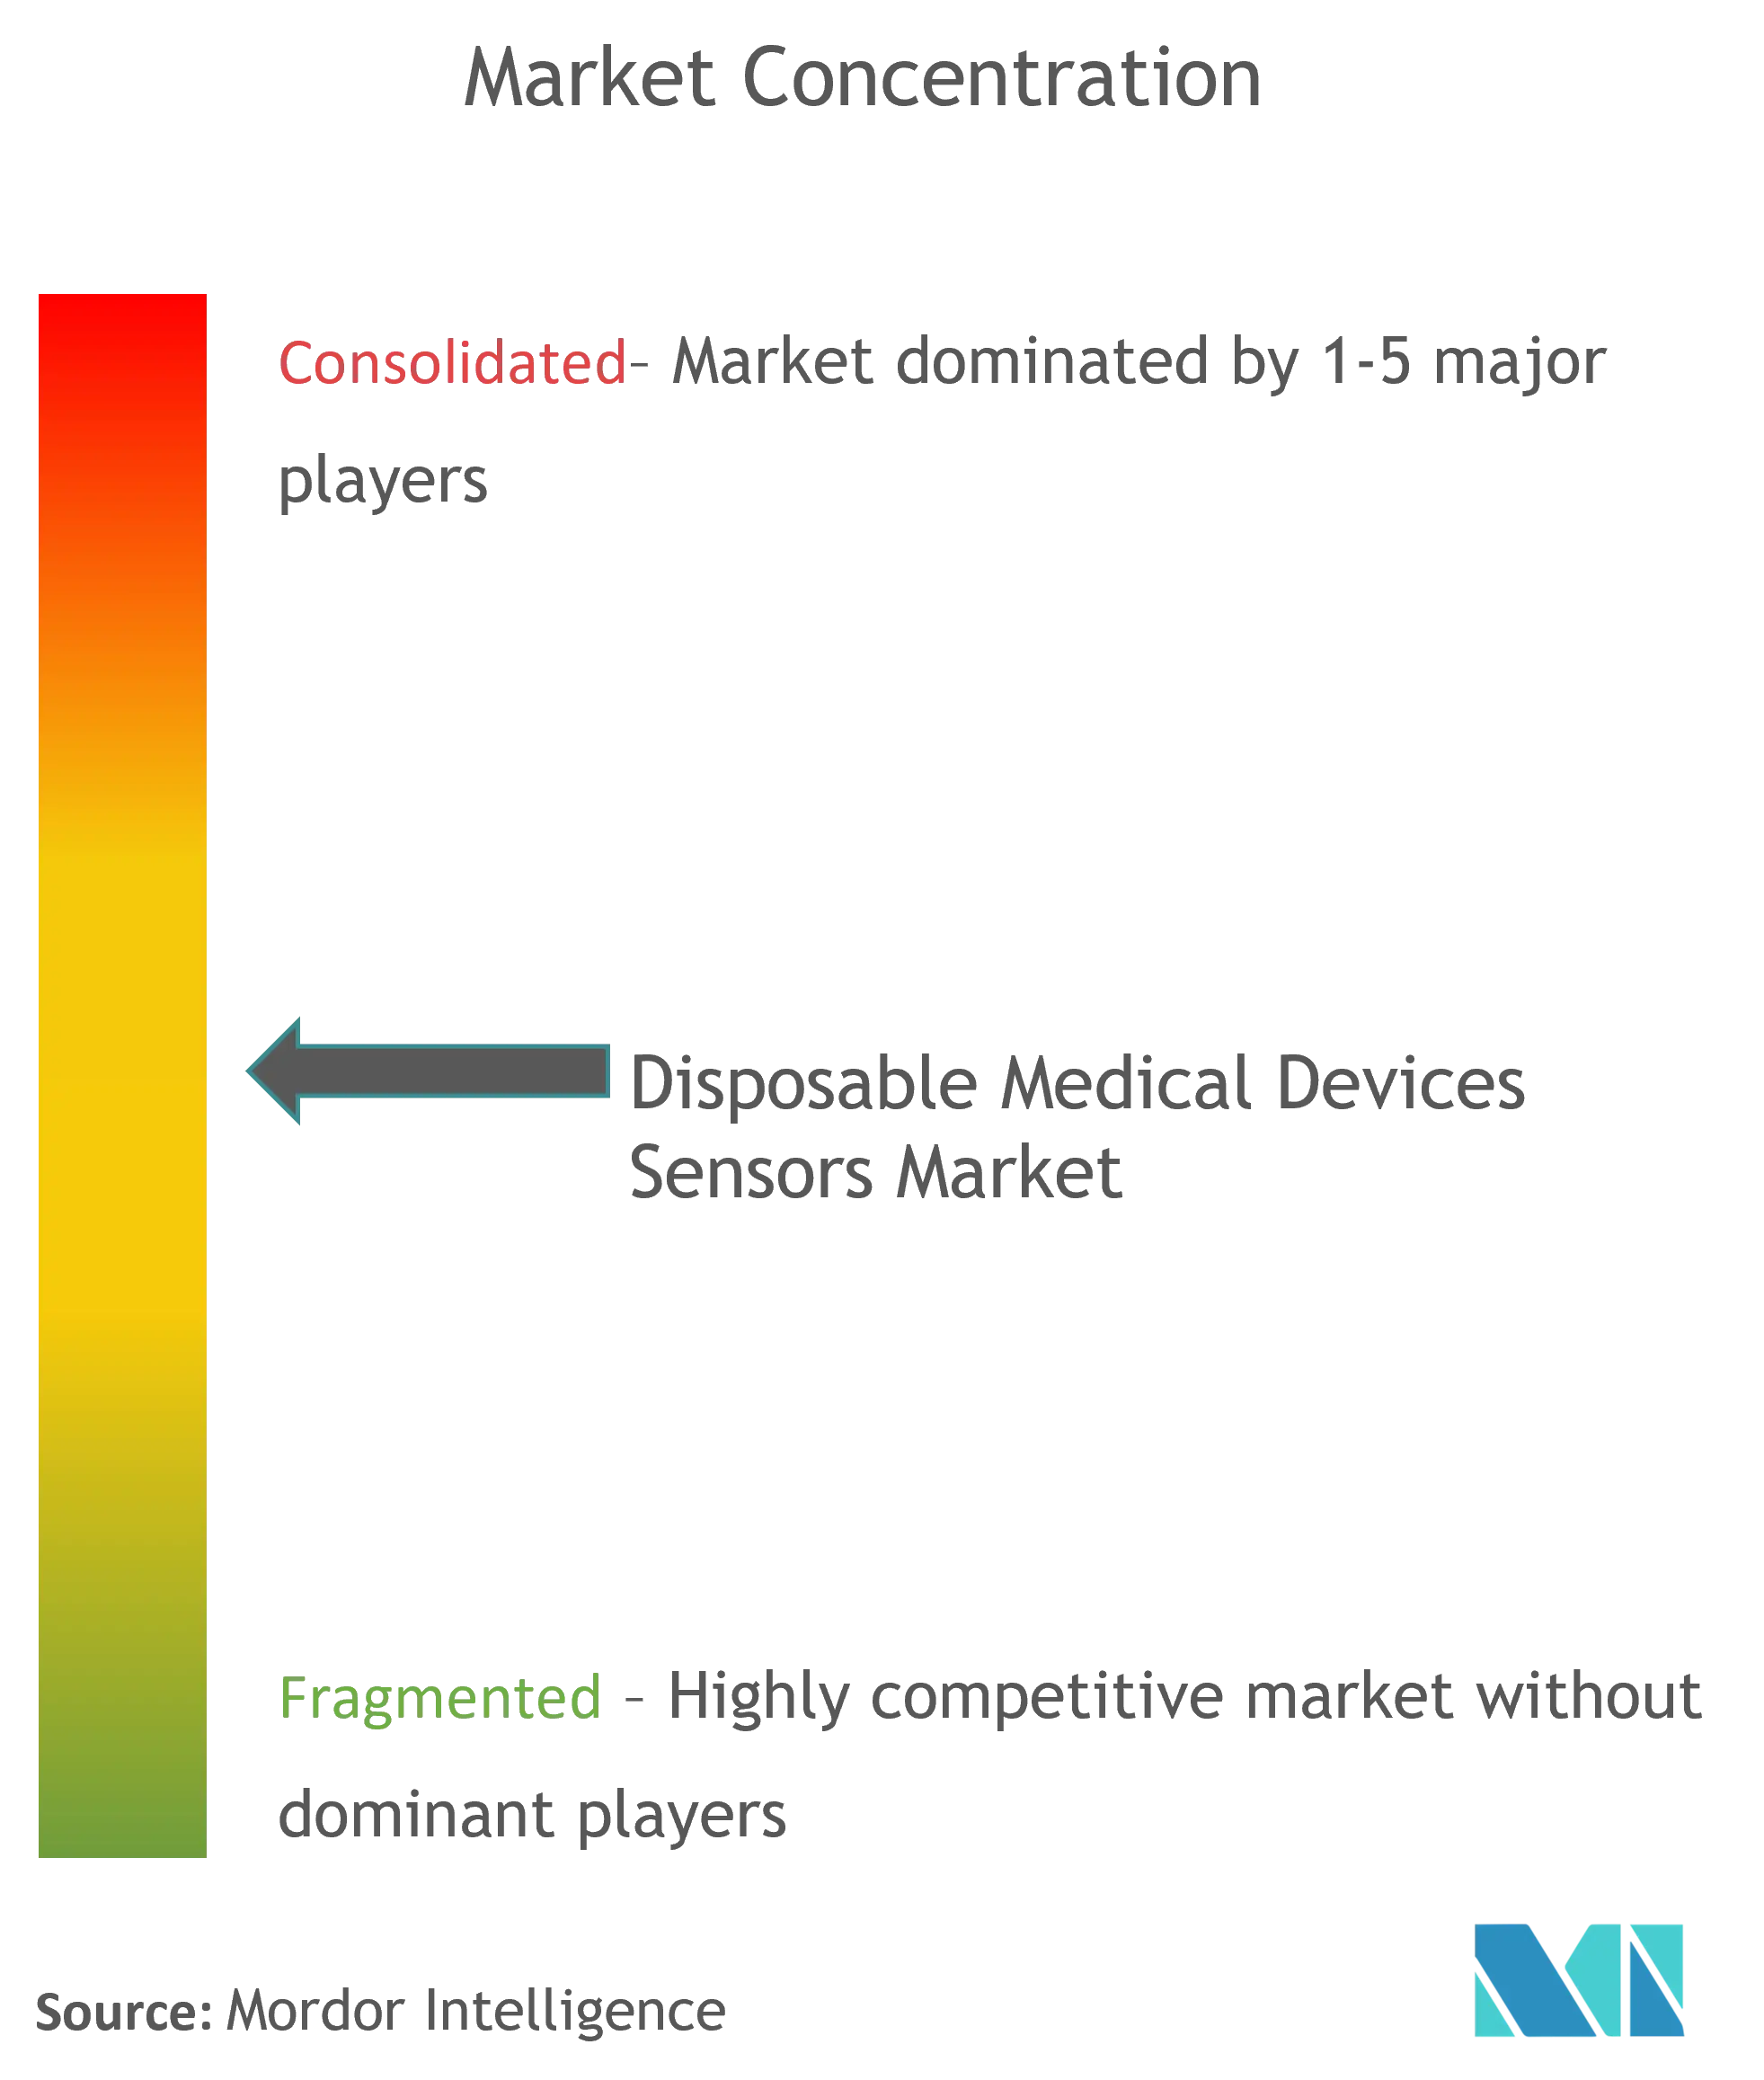 Disposable Medical Devices Sensors Market Concentration